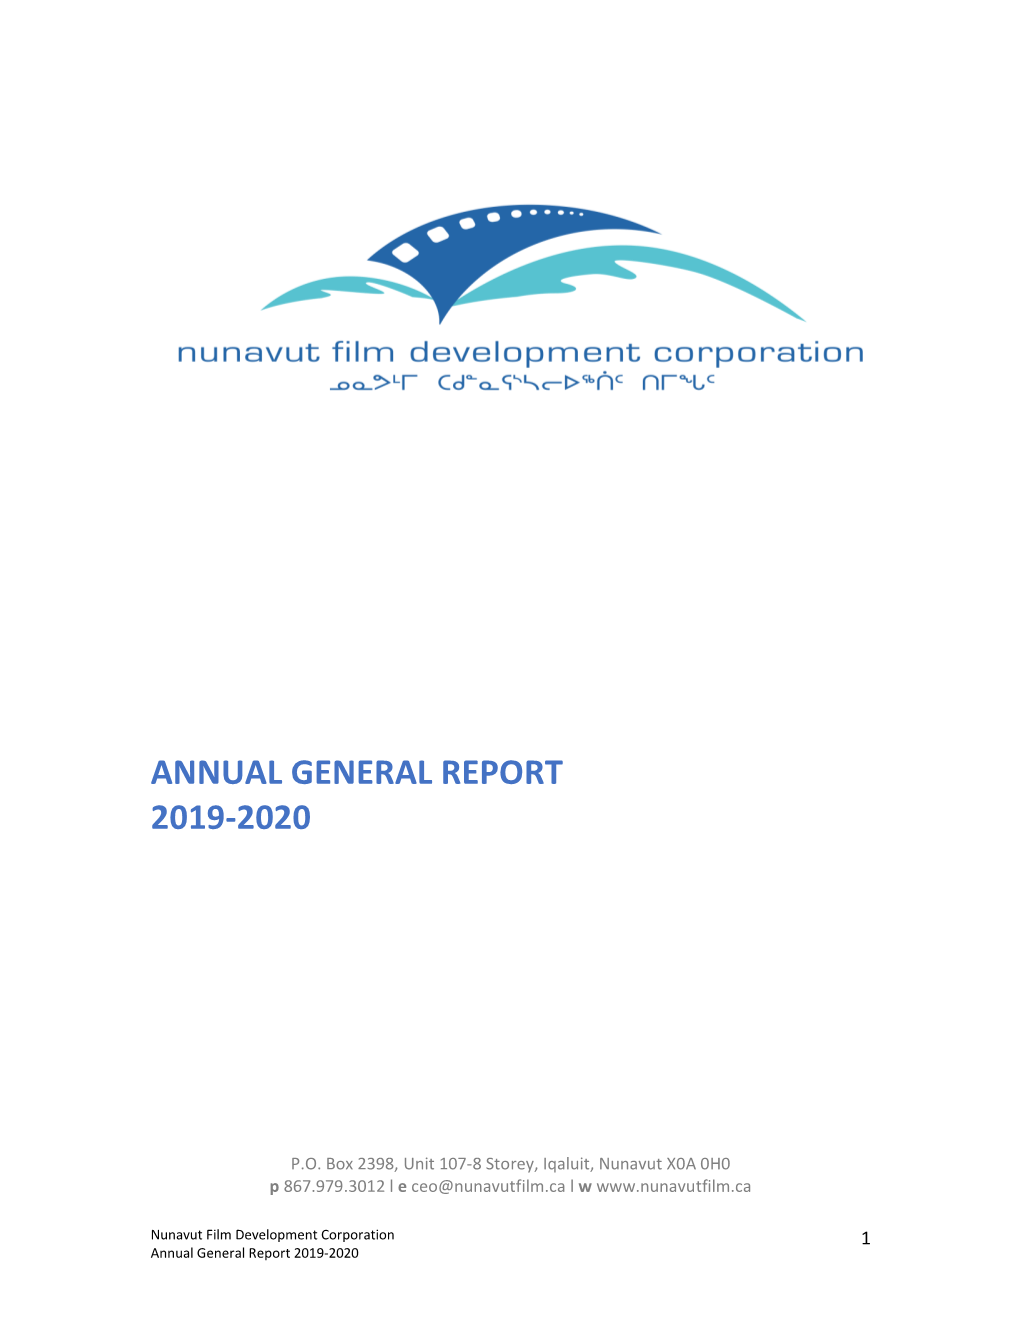 Annual General Report 2019-2020